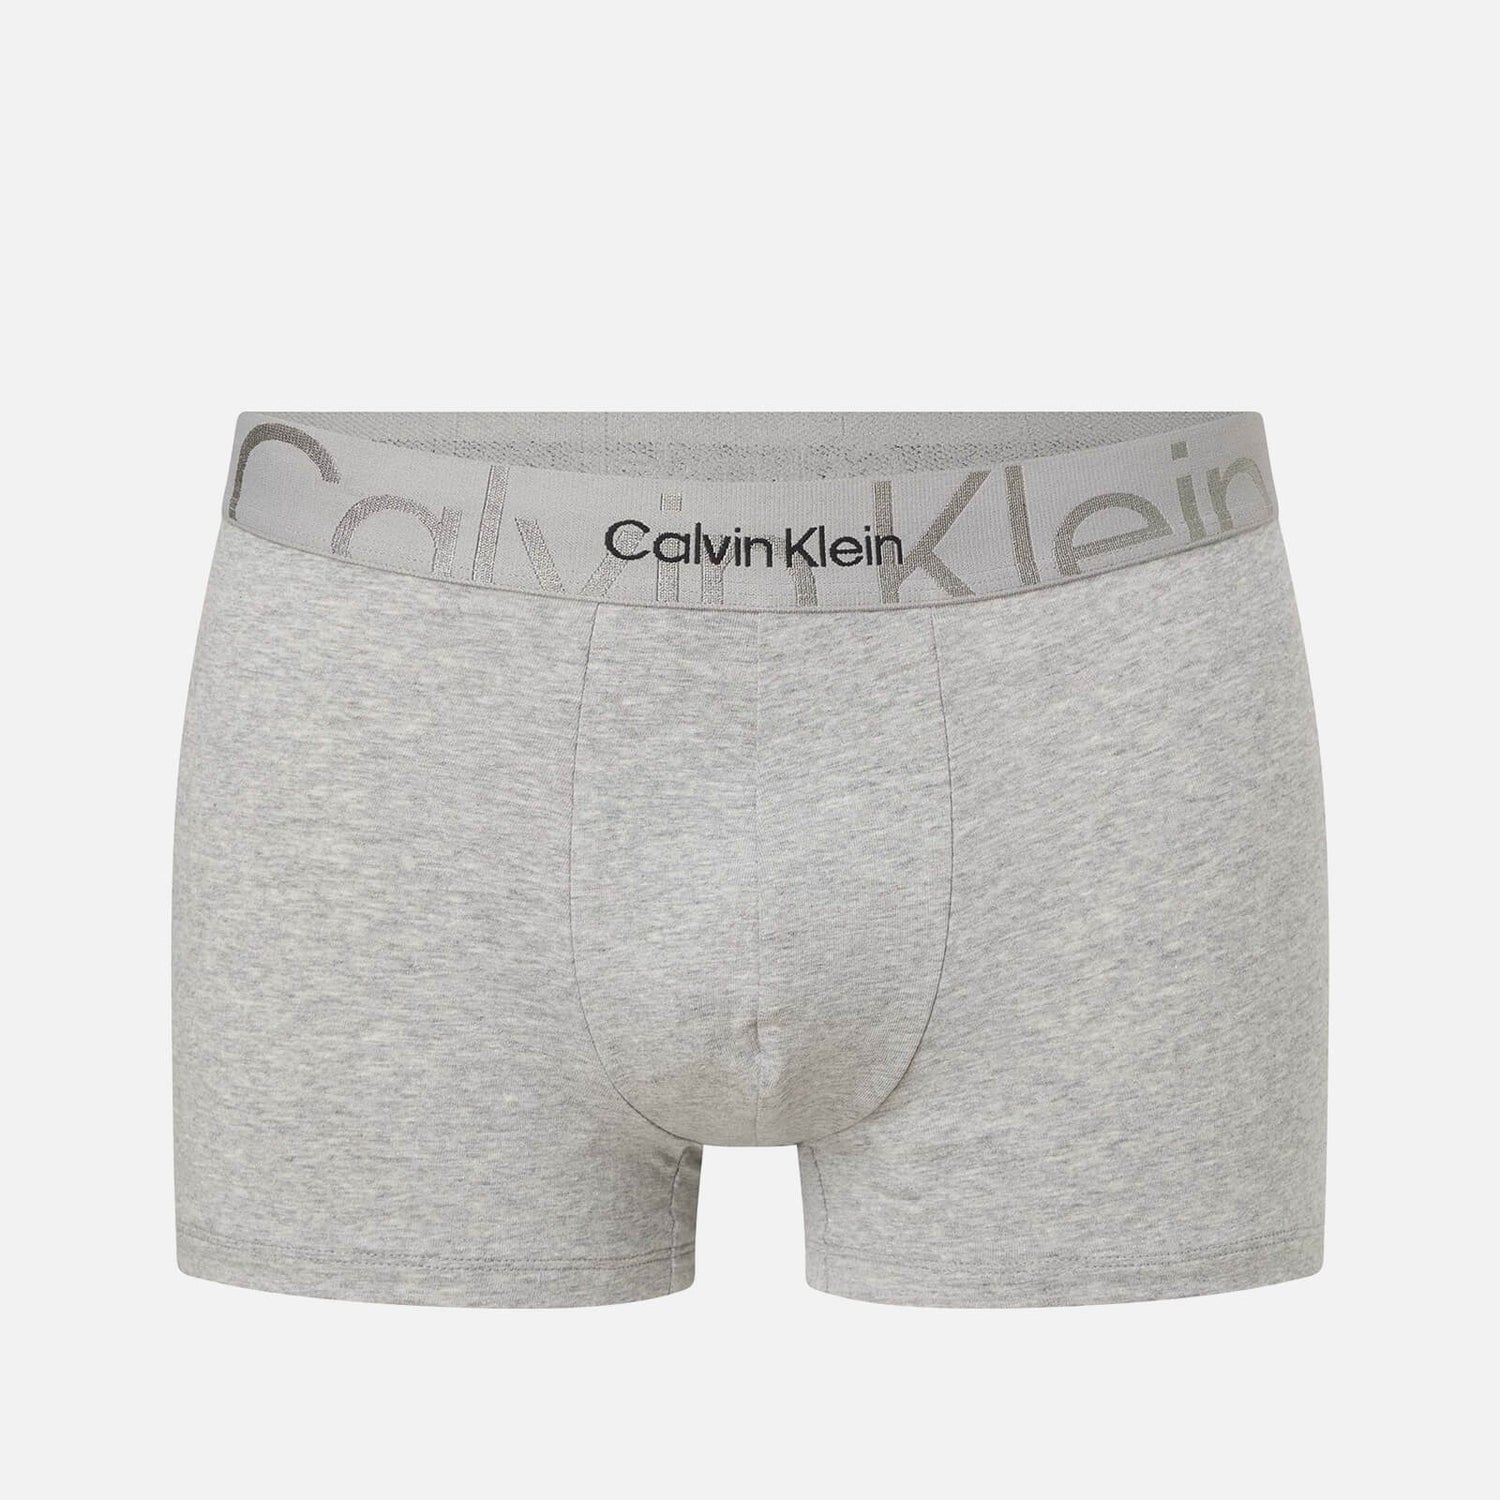 Calvin Klein Trunk Boxer Shorts - M